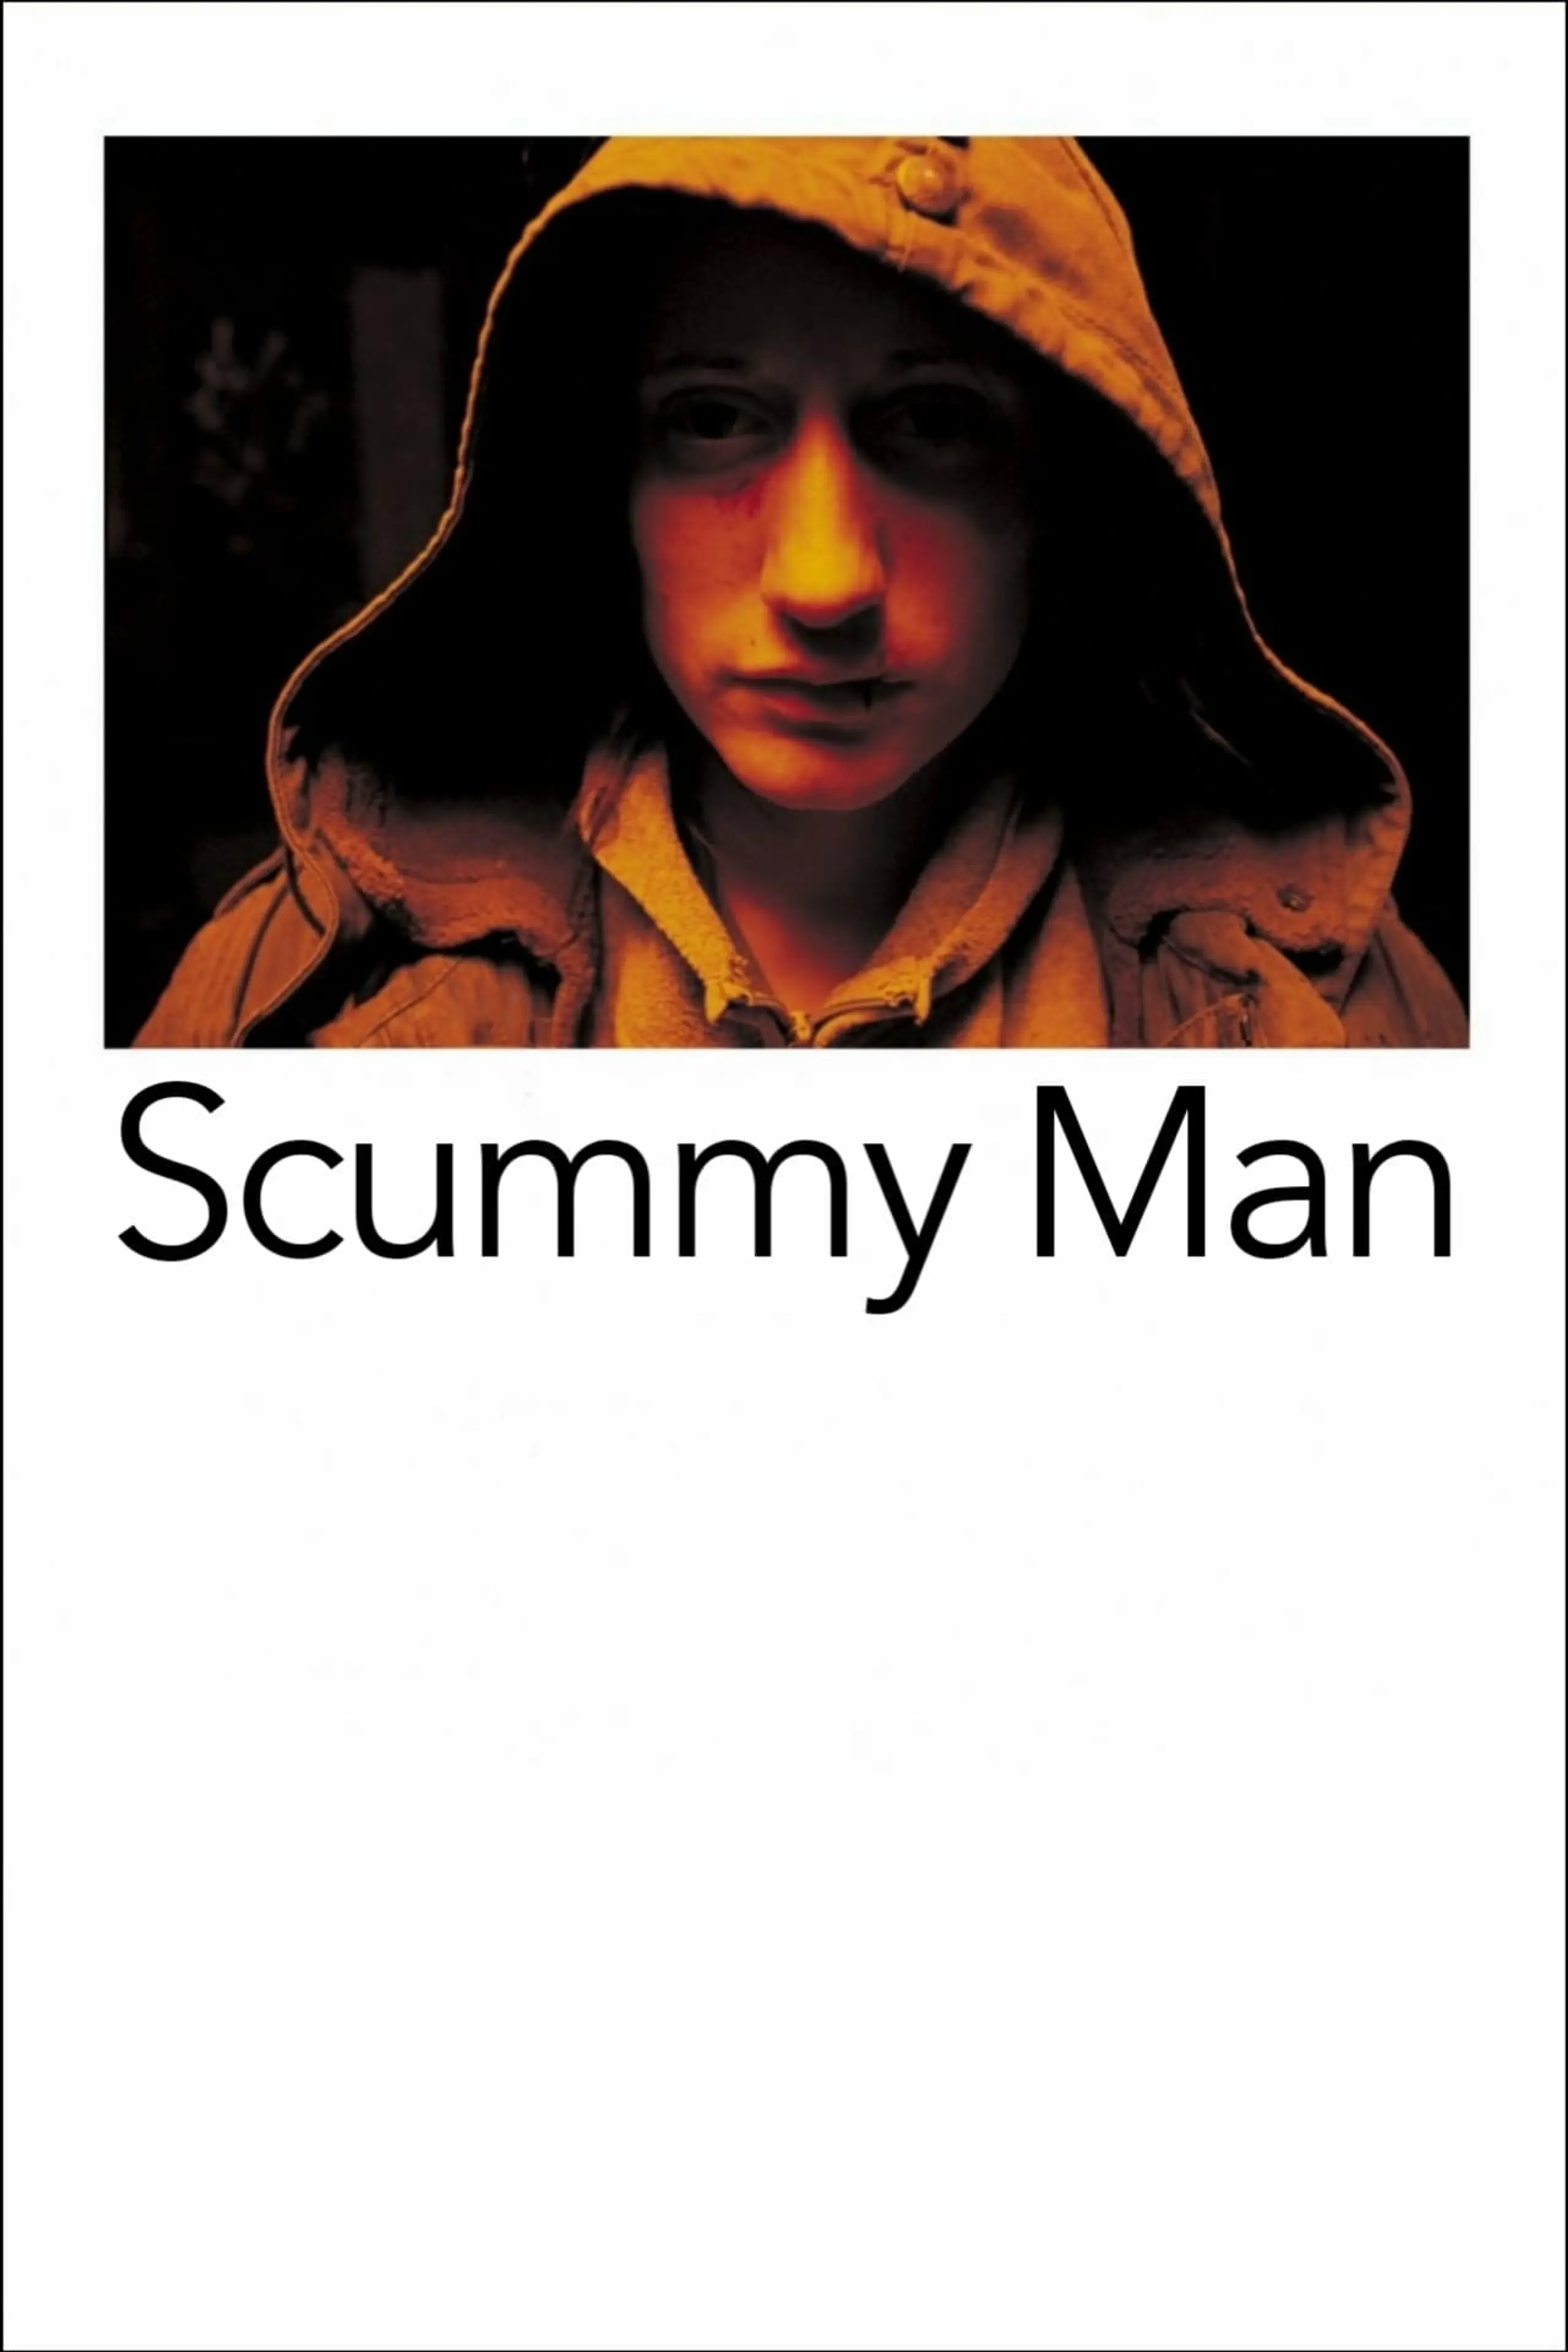 Scummy Man